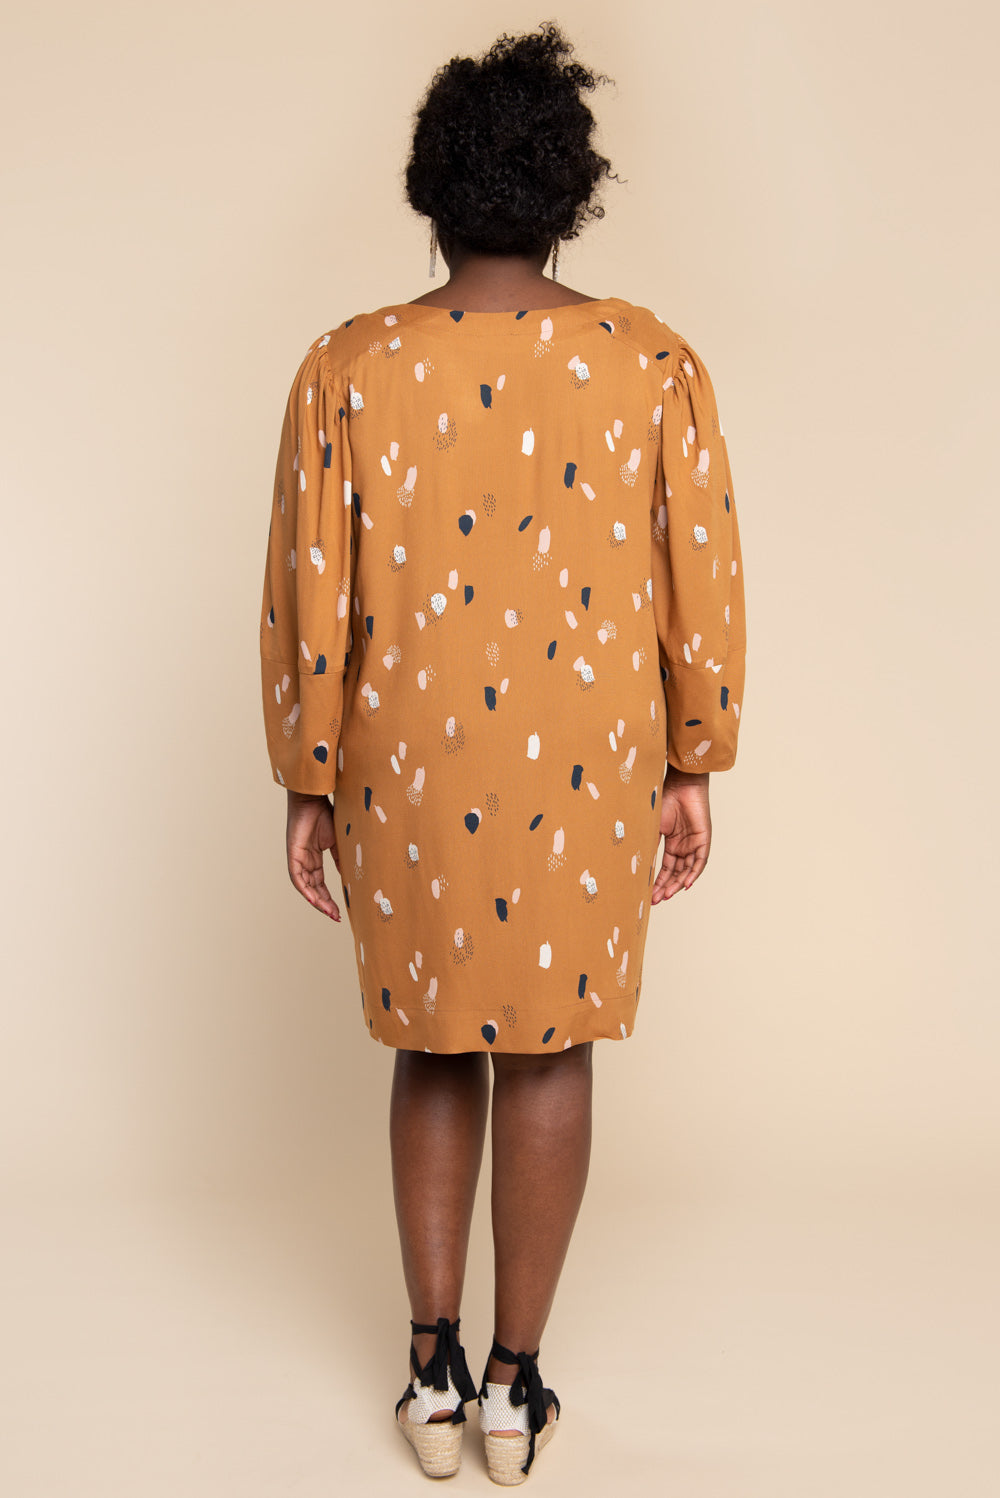 Cielo Top + Dress Sizes 0-20 - Closet Core Patterns